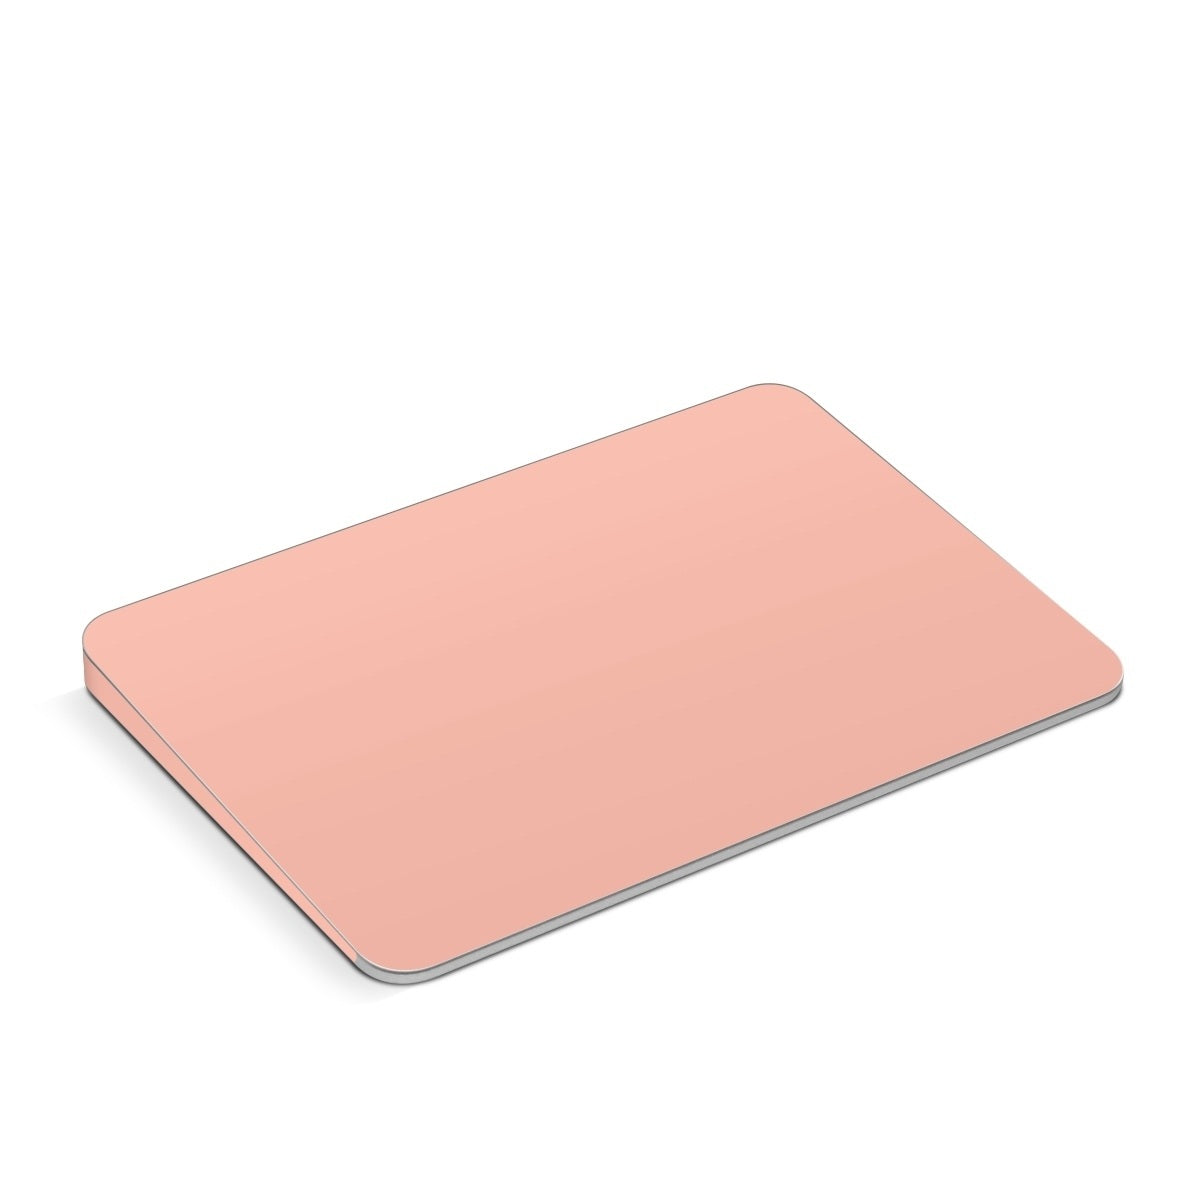 Solid State Peach - Apple Magic Trackpad Skin